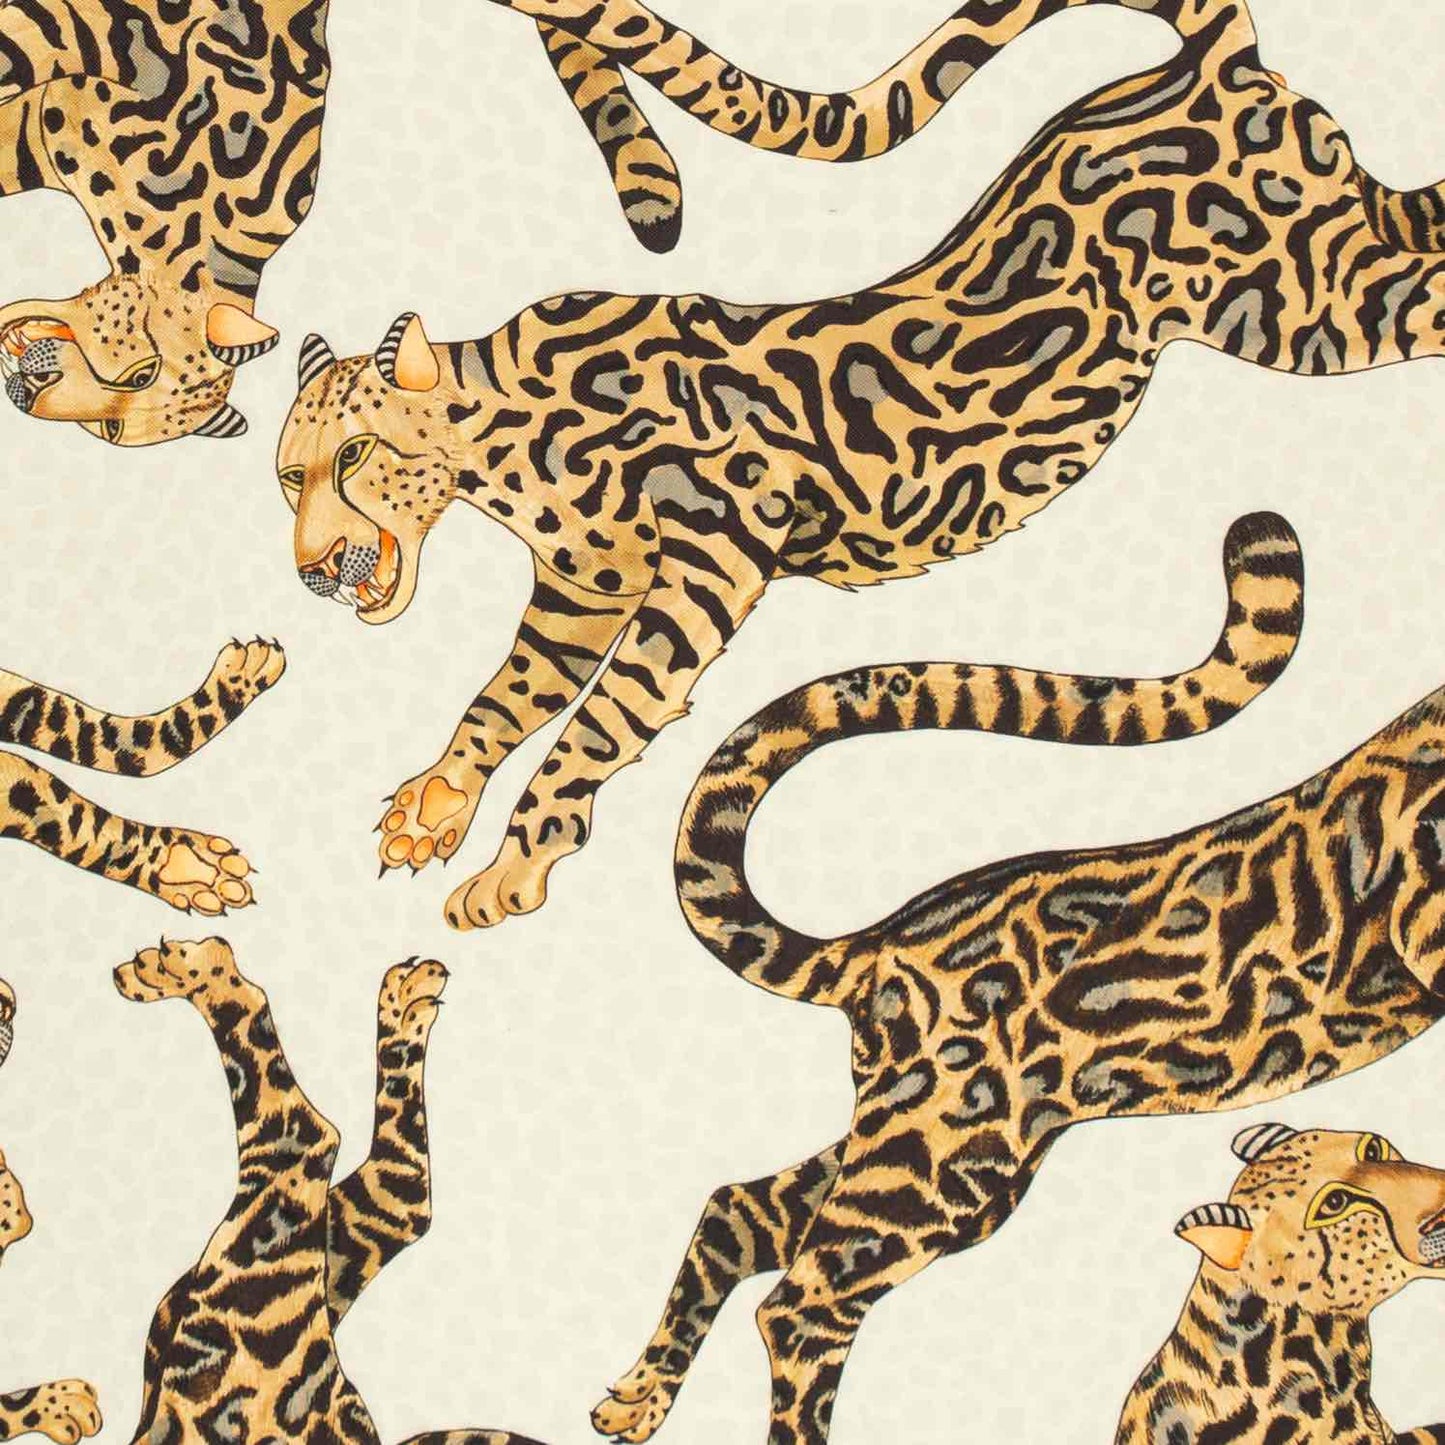 Cheetah Kings Stone Outdoor Fabric